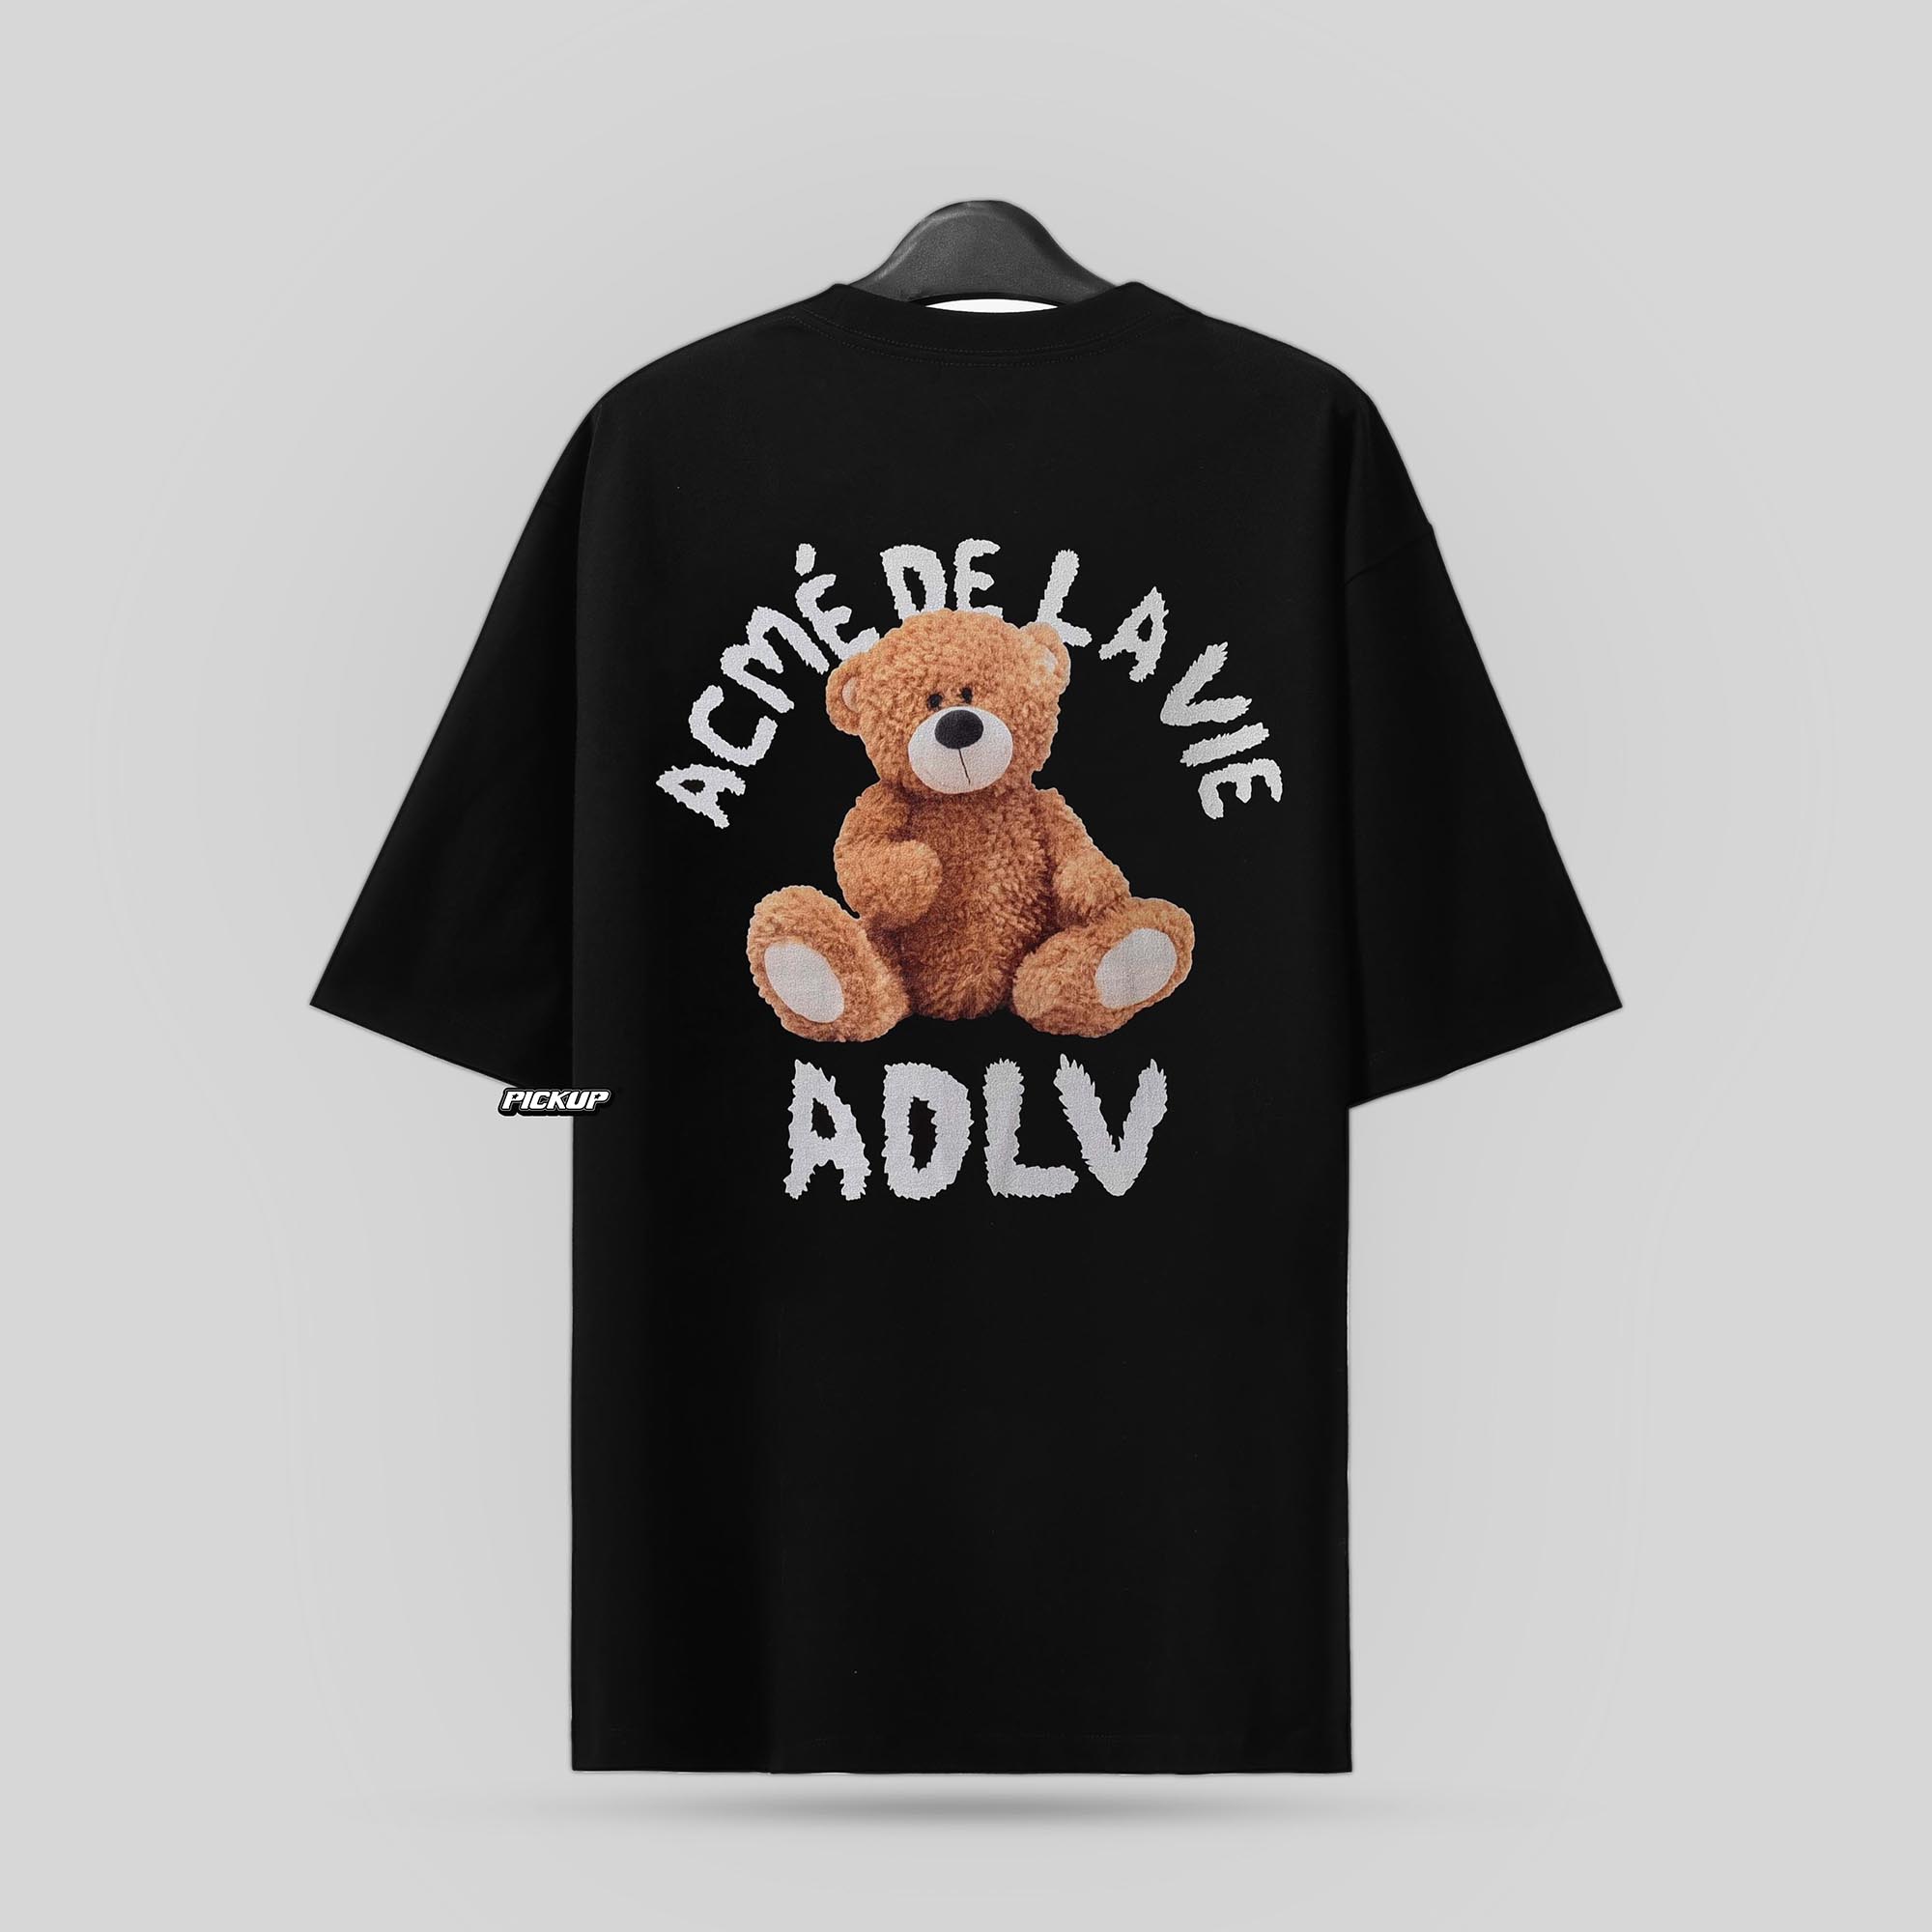 ADLV Baby Face Short Sleeve Bear Doll Tshirt - Black